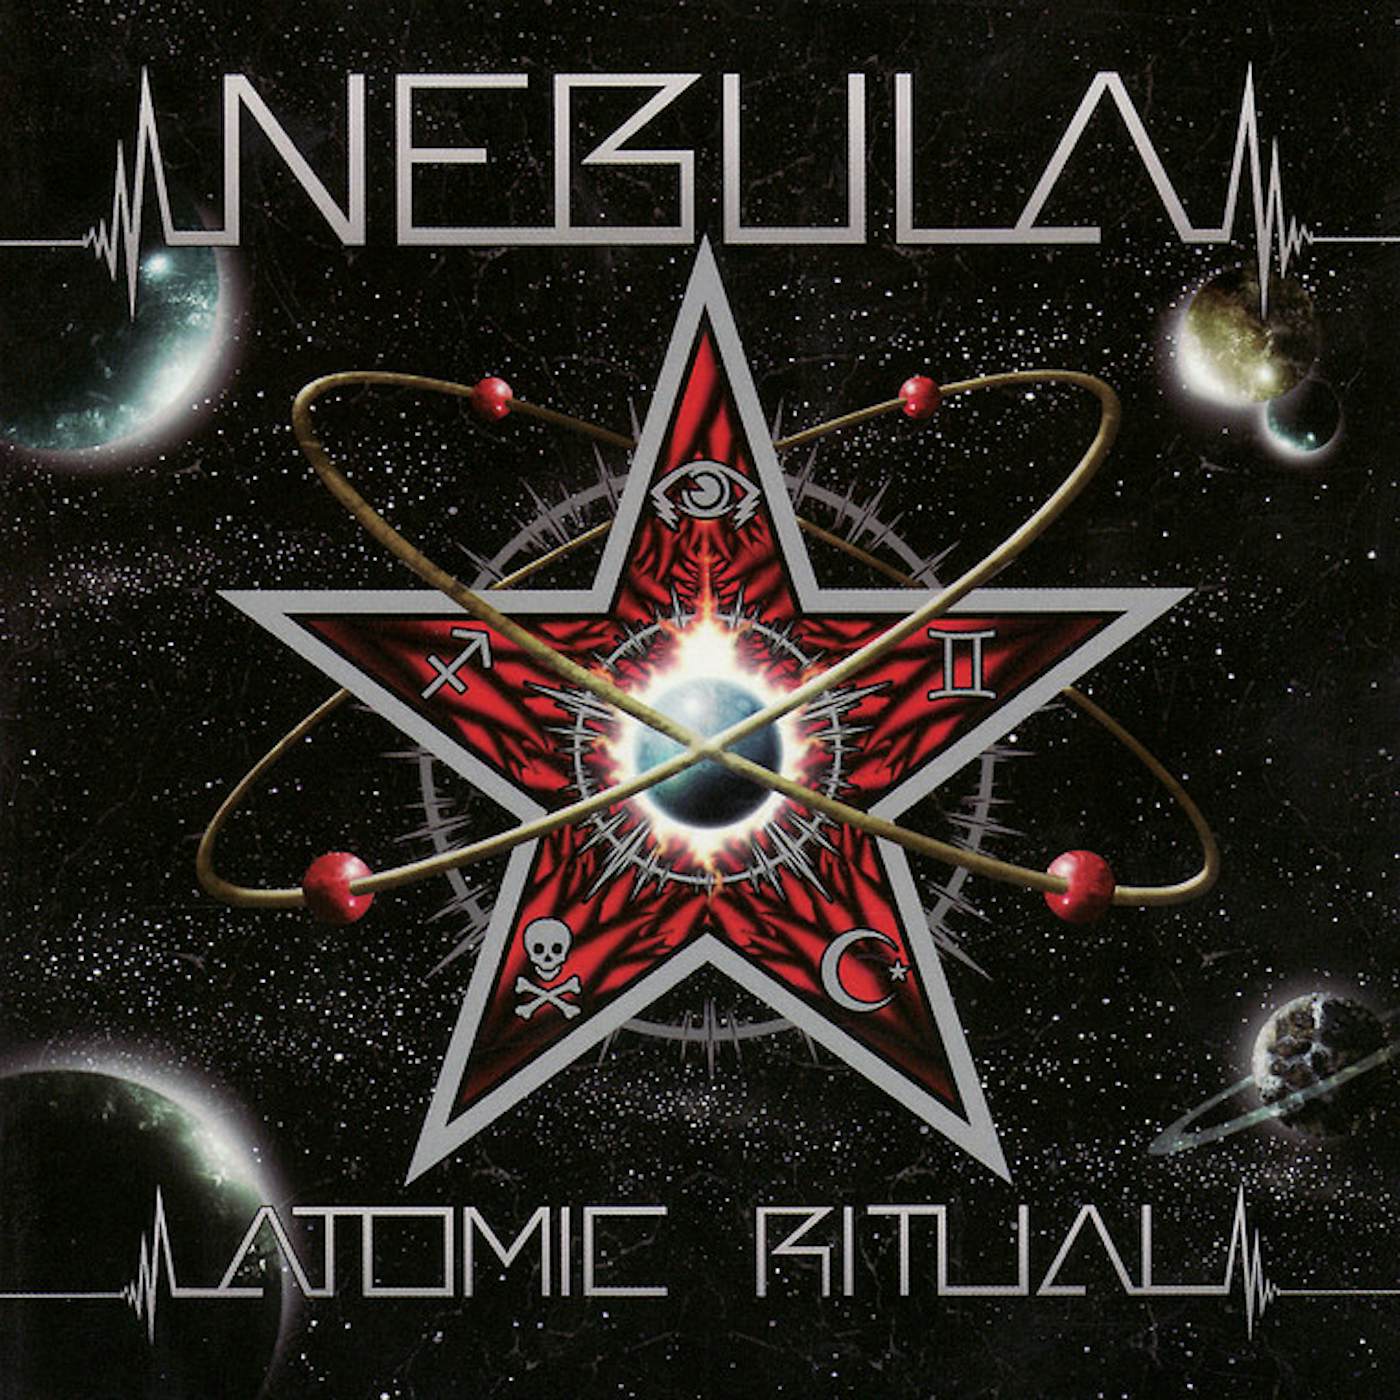 Nebula ATOMIC RITUAL CD